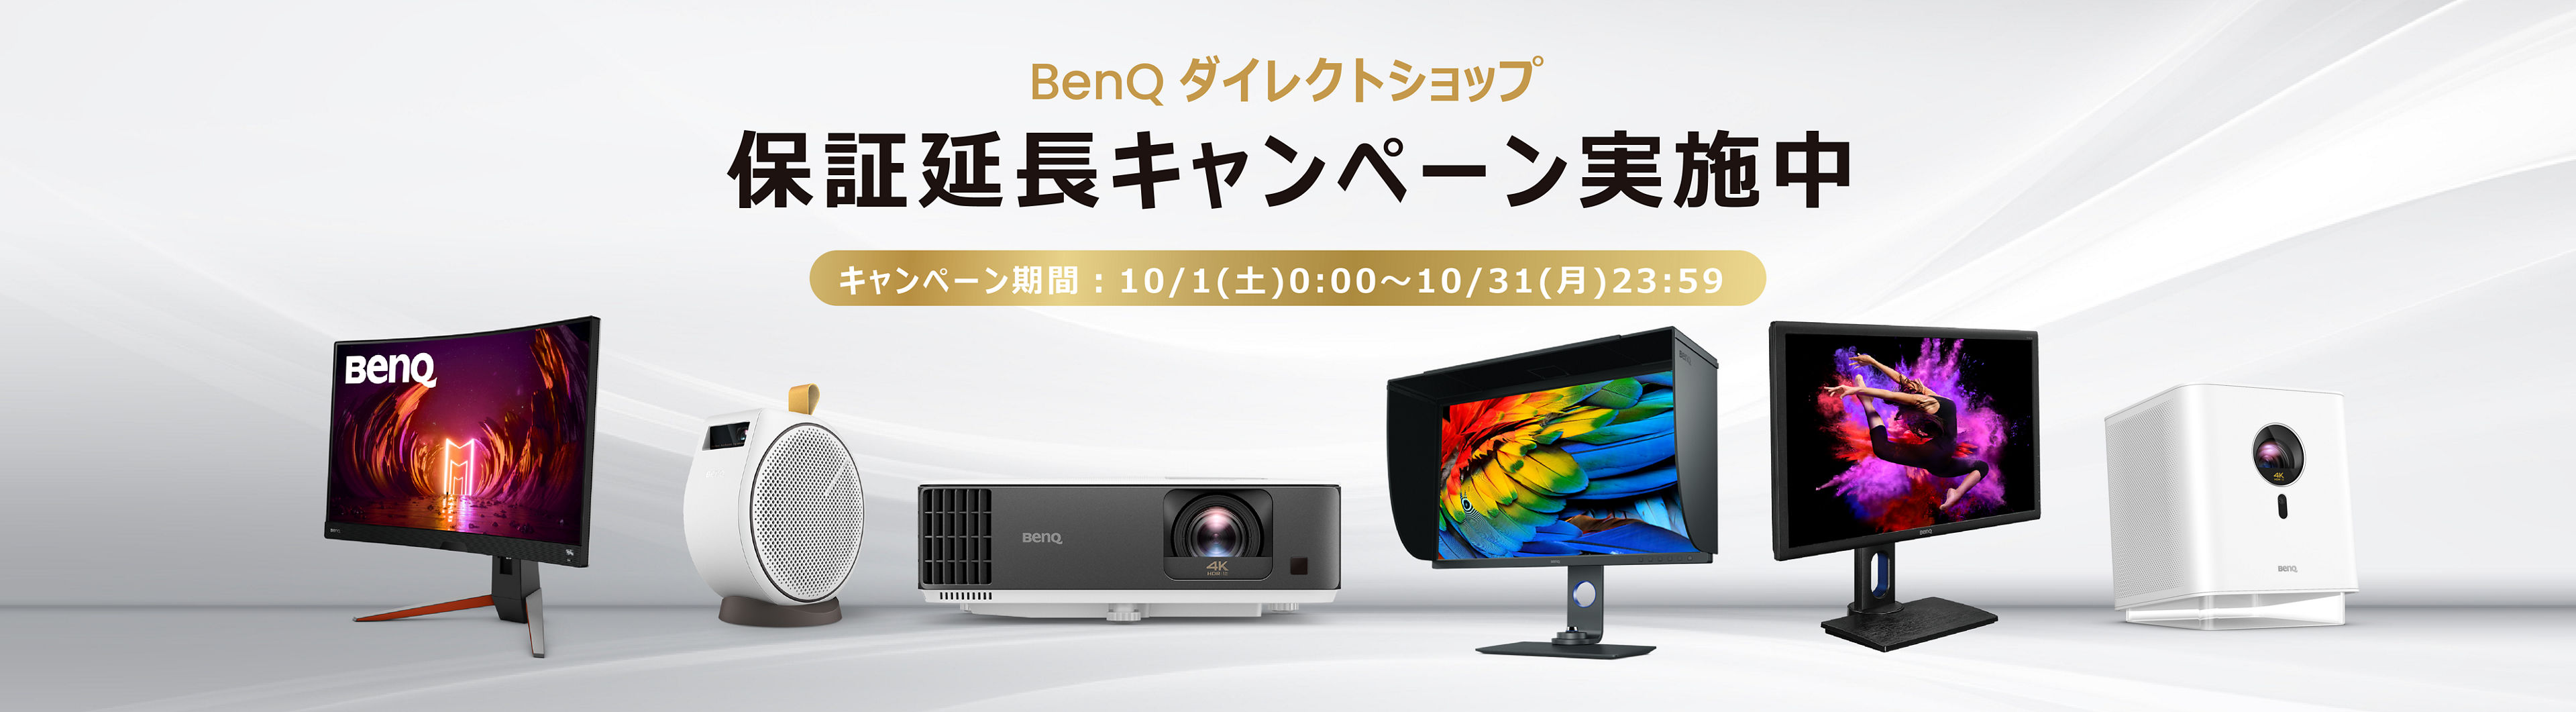 BenQ News | ベンキューダイレクトオンラインショップ 保証延長のキャンペーンのご案内 | ベンキュージャパン